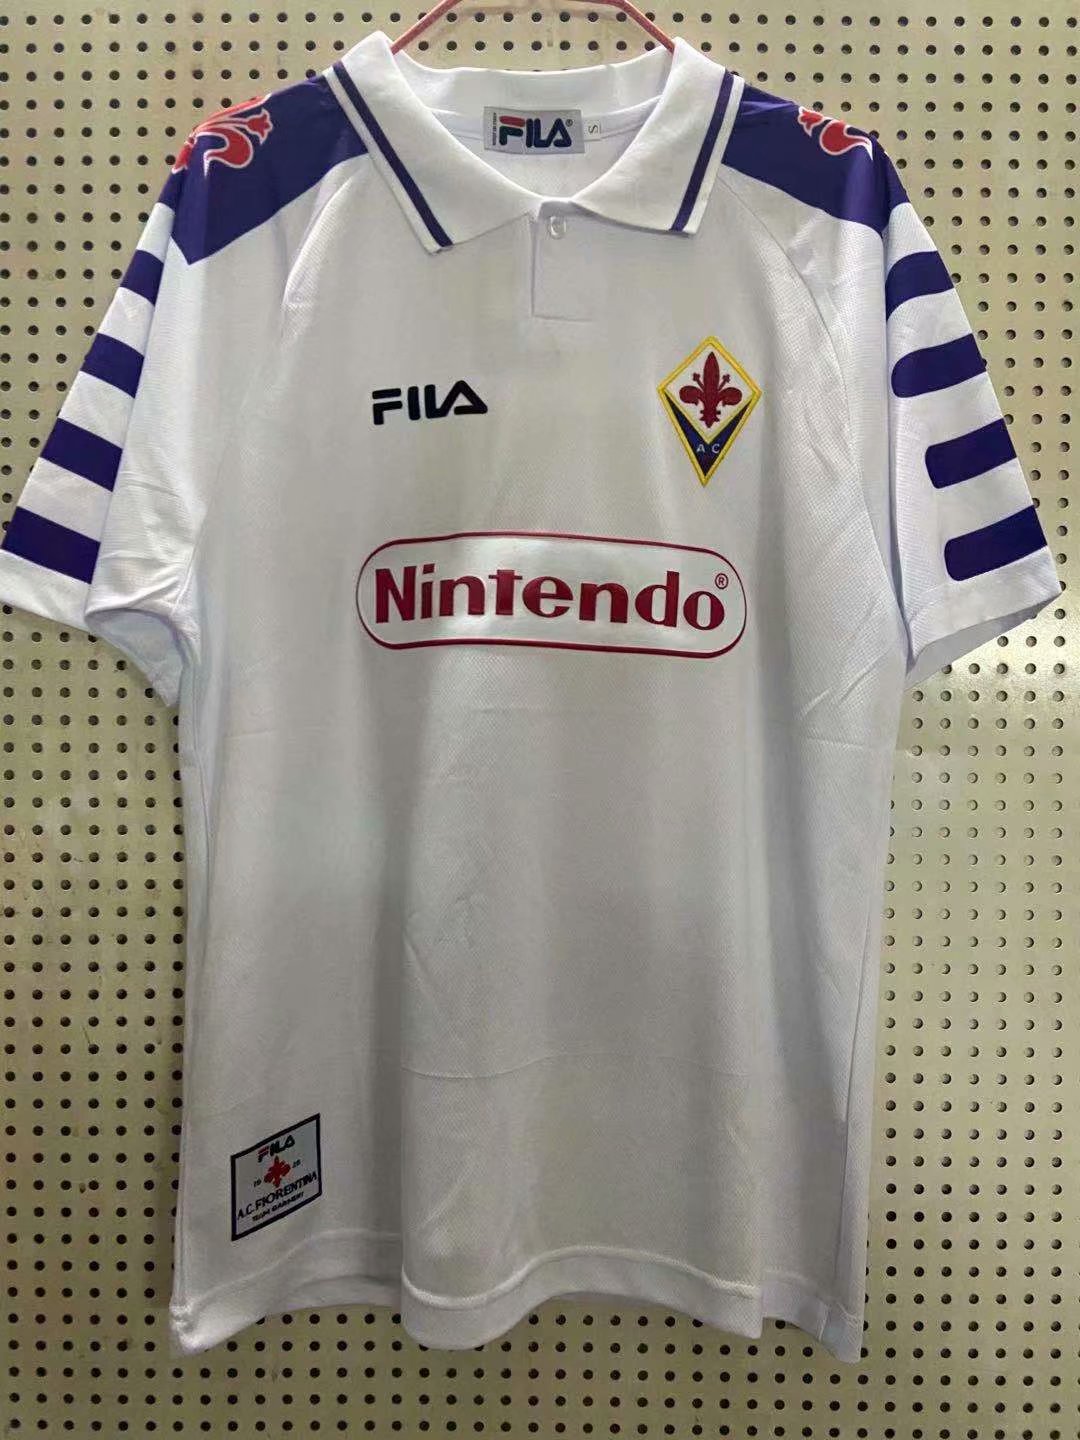 1998 fiorentina away Retro jersey